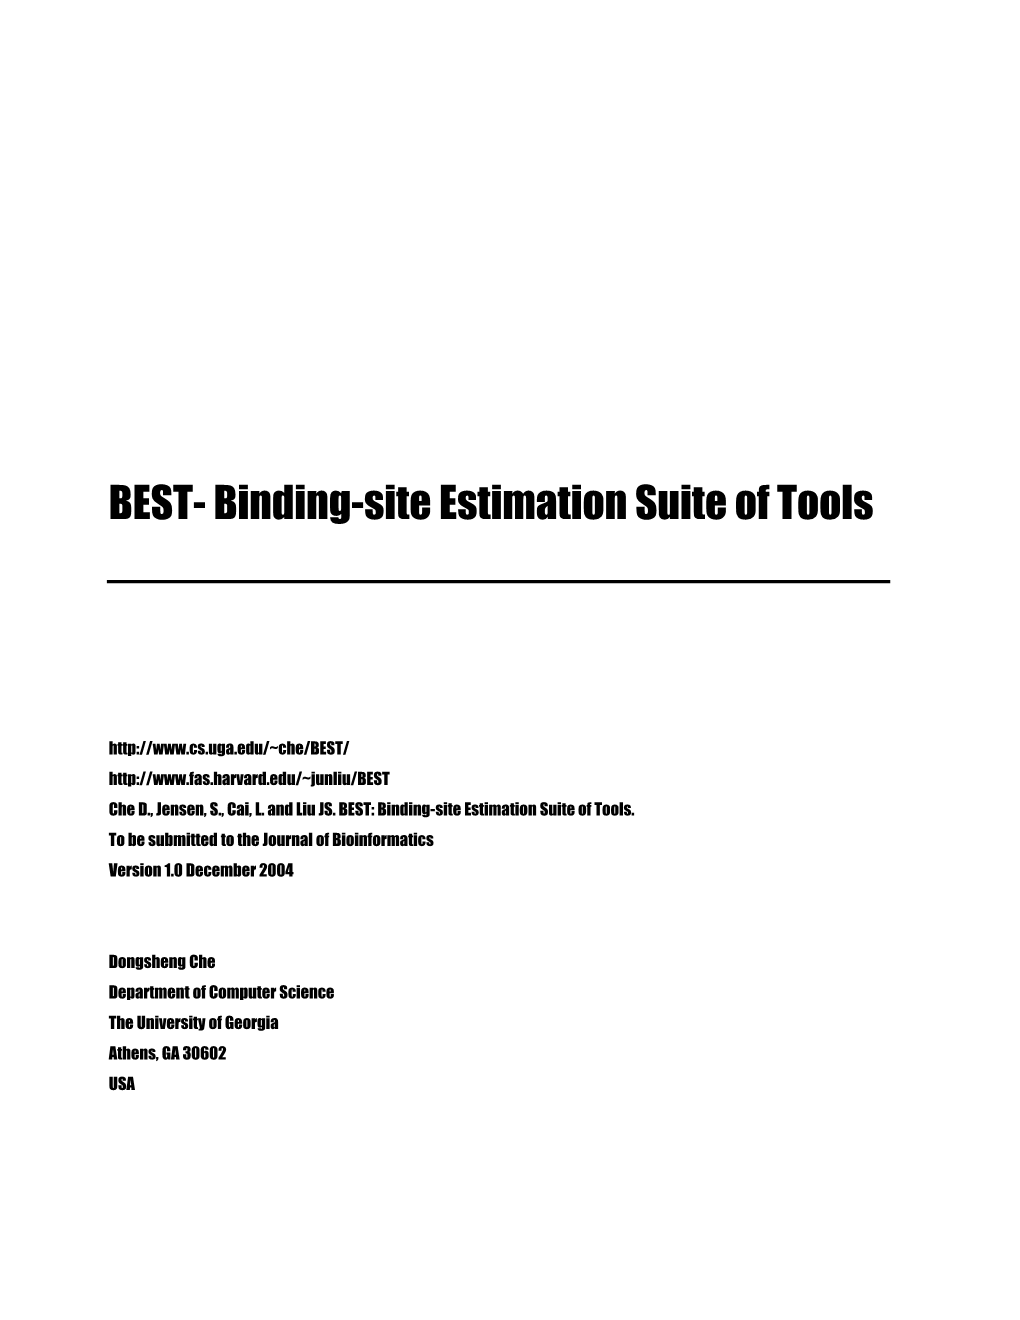 BEST- Binding-Site Estimation Suite of Tools